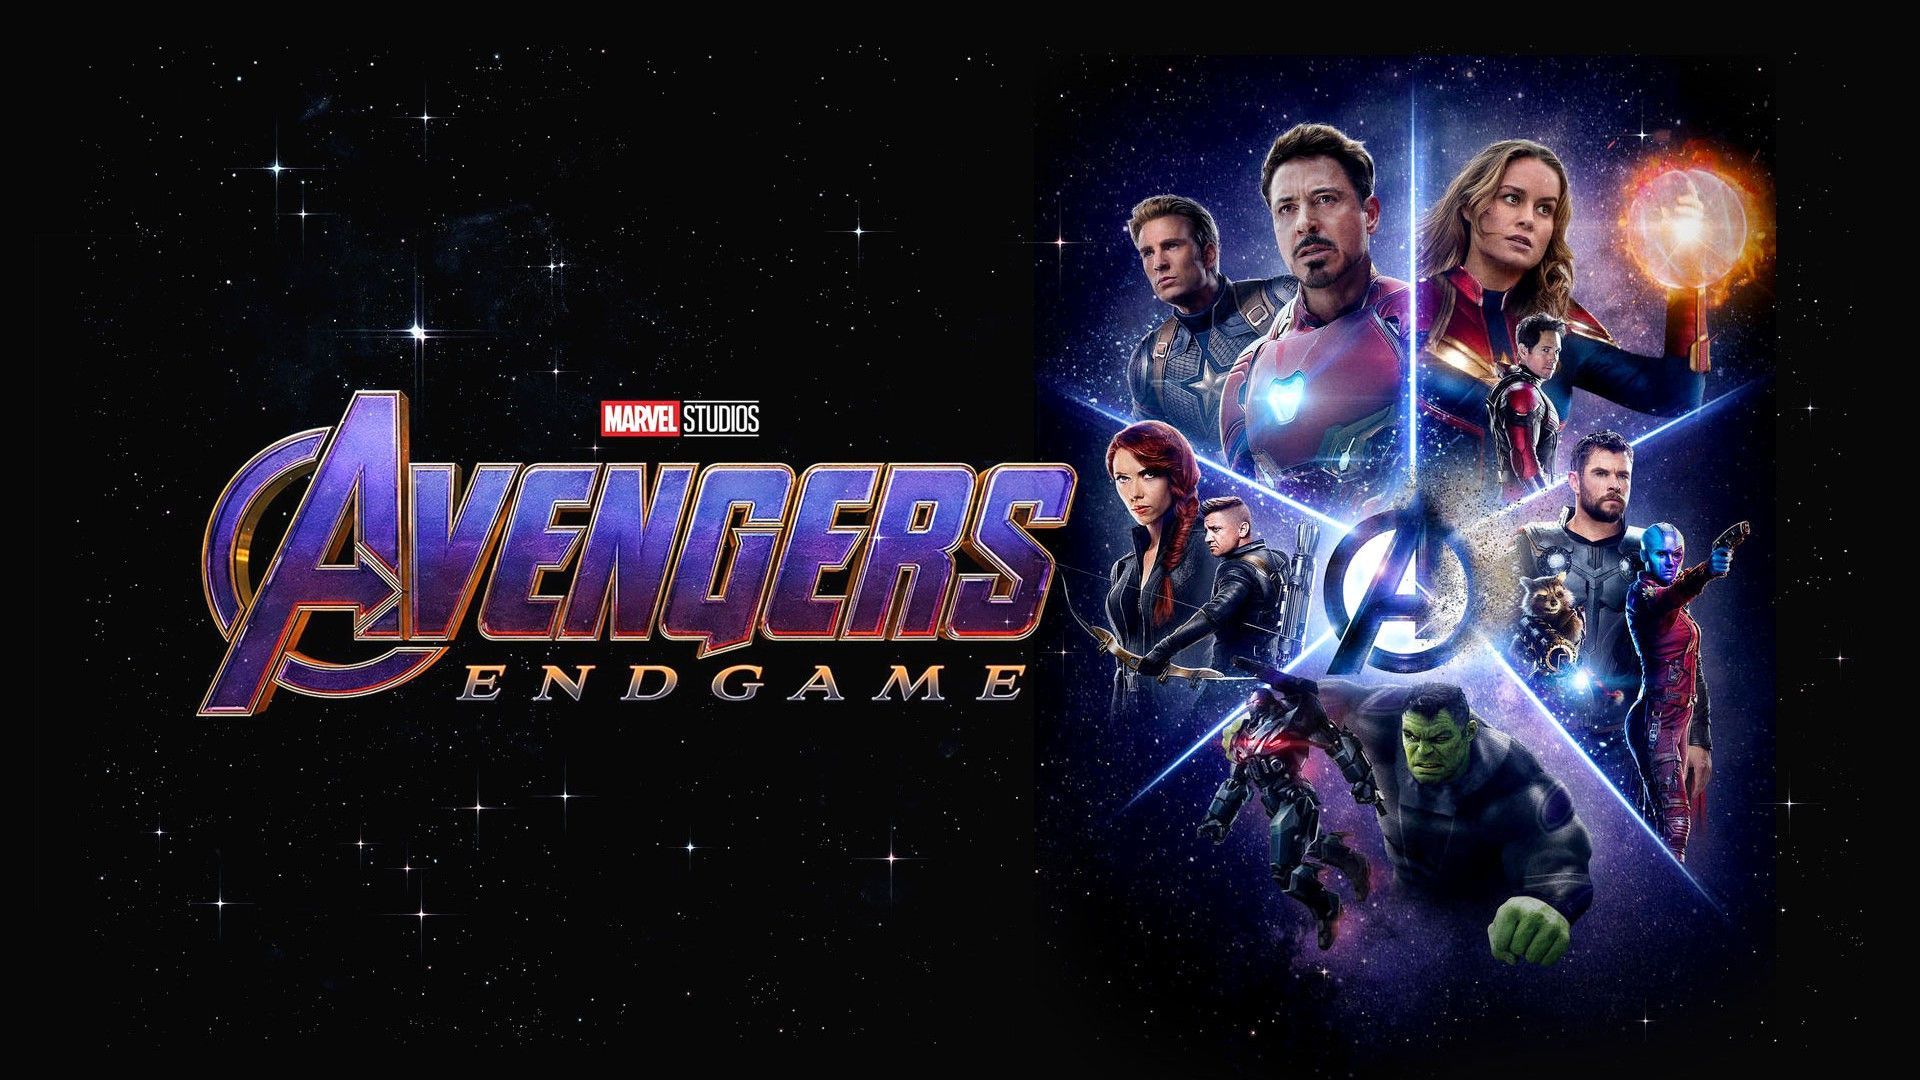 Beautiful Avengers Endgame 2019 Background. Avengers